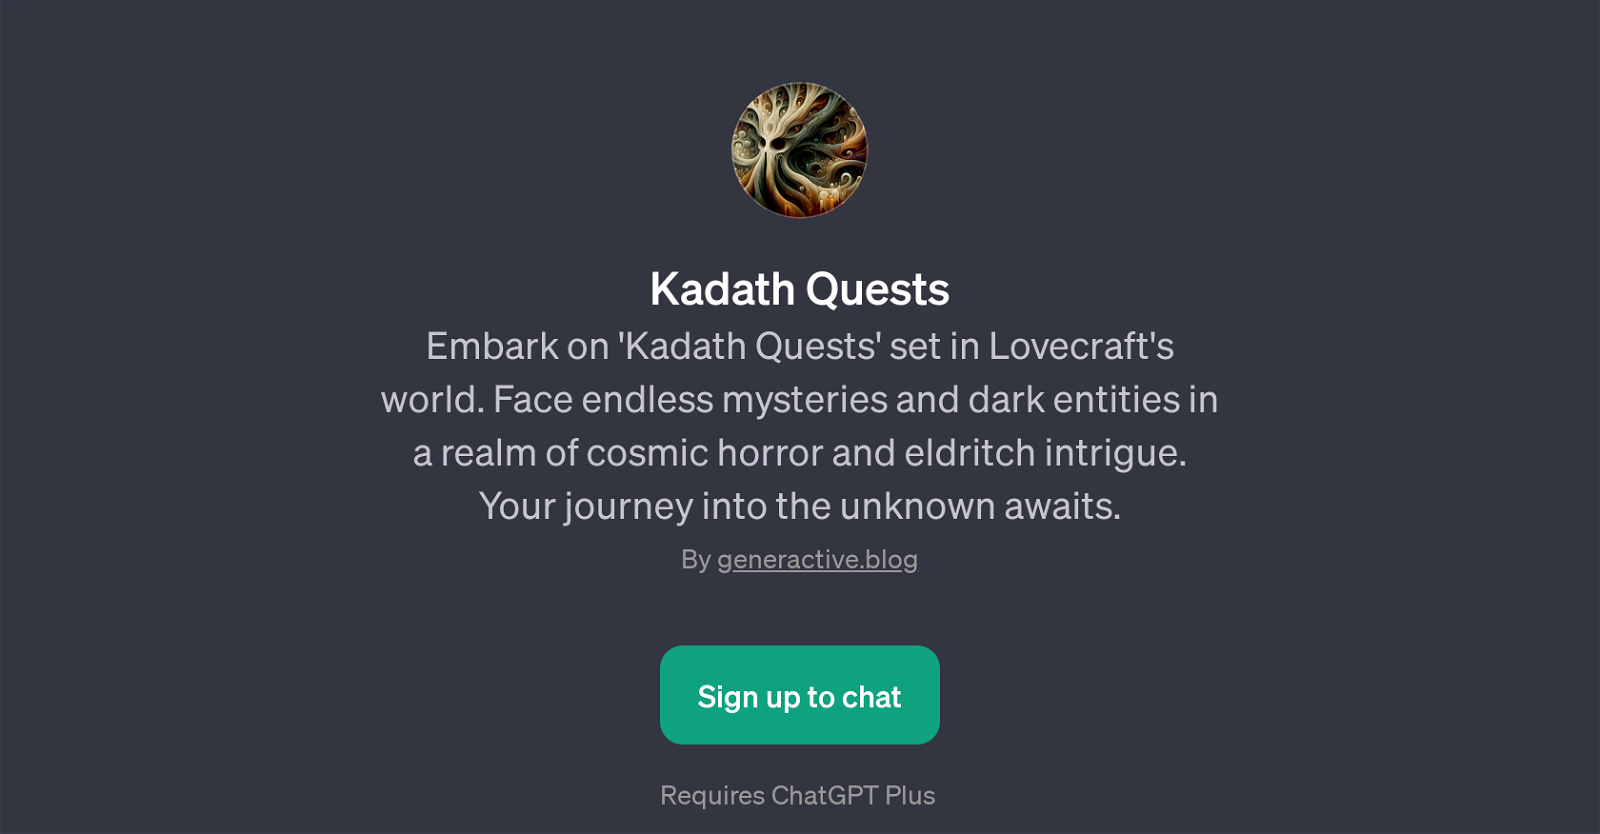 Kadath Quests website